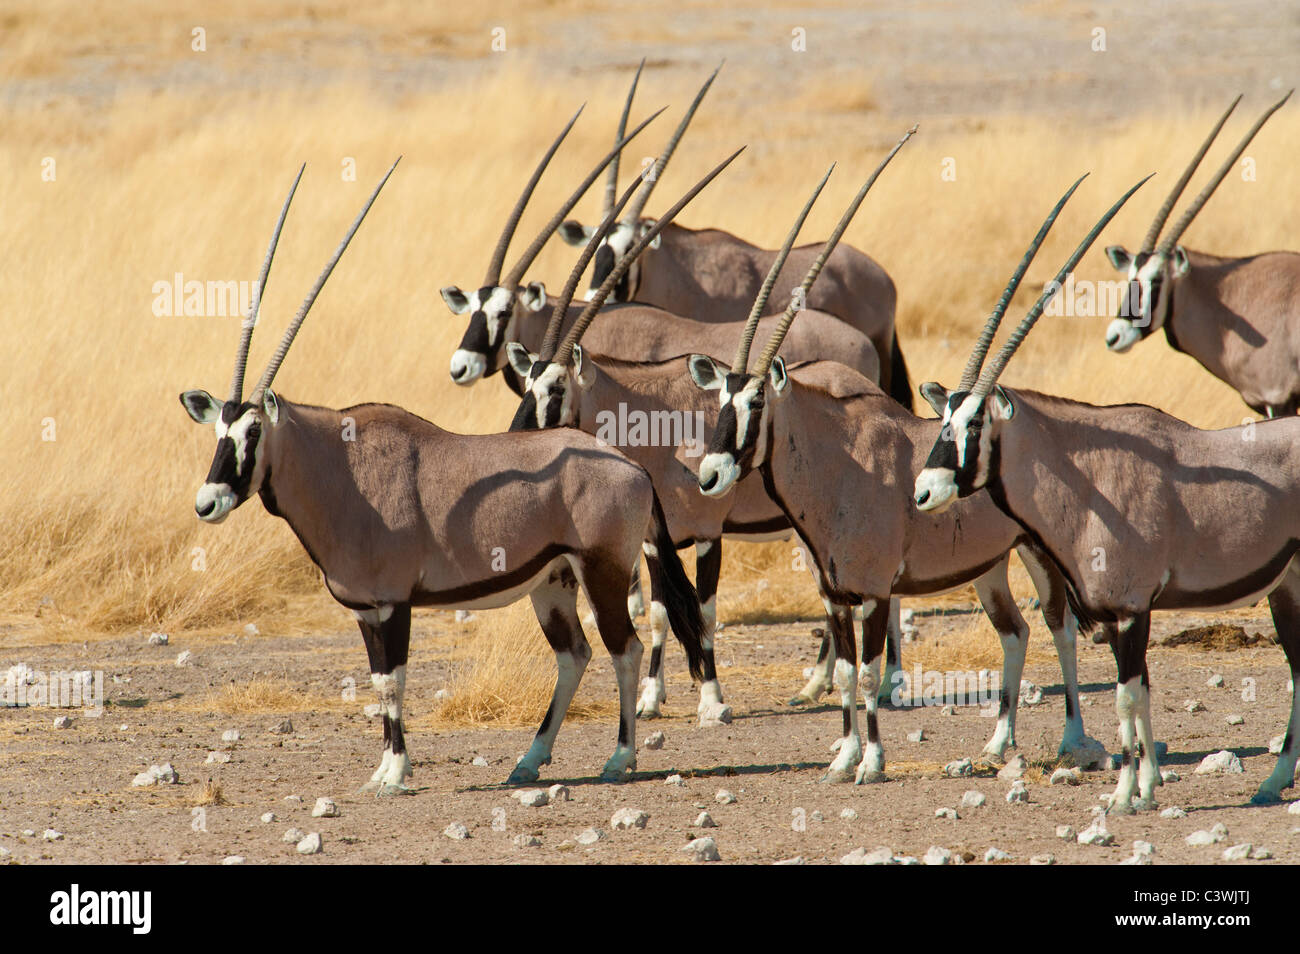 Oryx gazella namibie gazelle d'or Golden Prairie grass land 600 mm fond lisse teleobjective tele gazell Banque D'Images